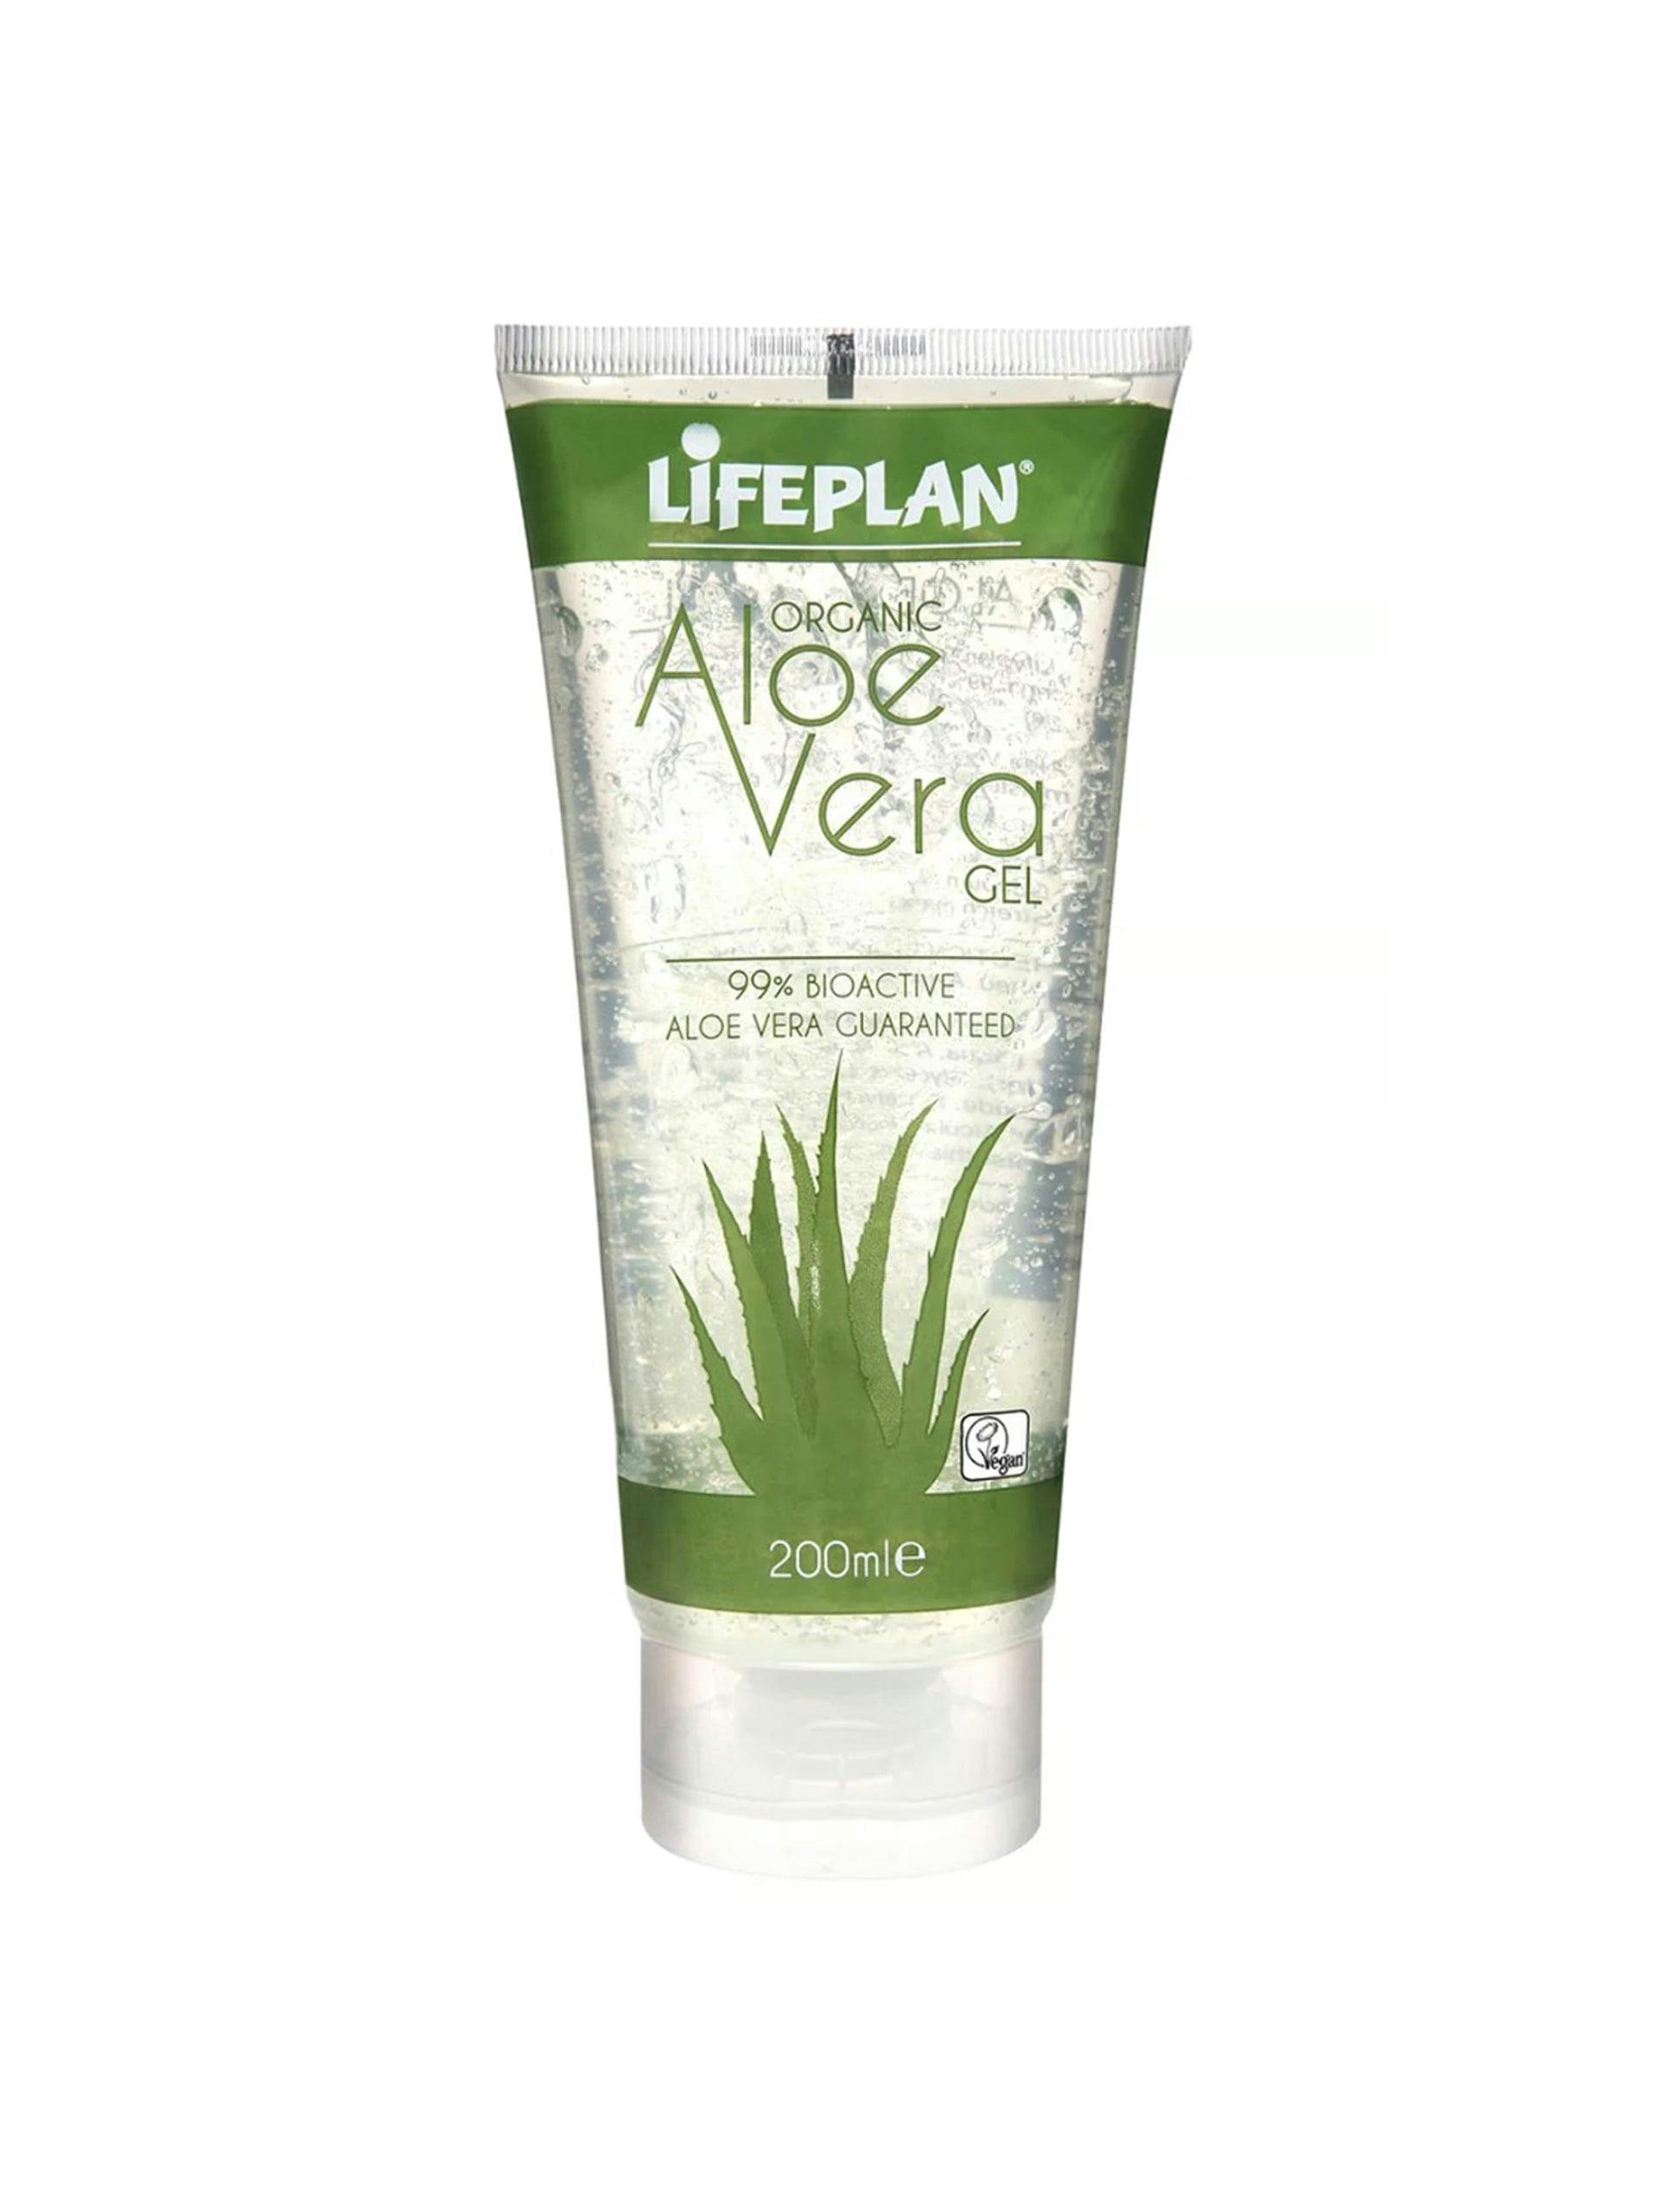 Aloe Vera body gel